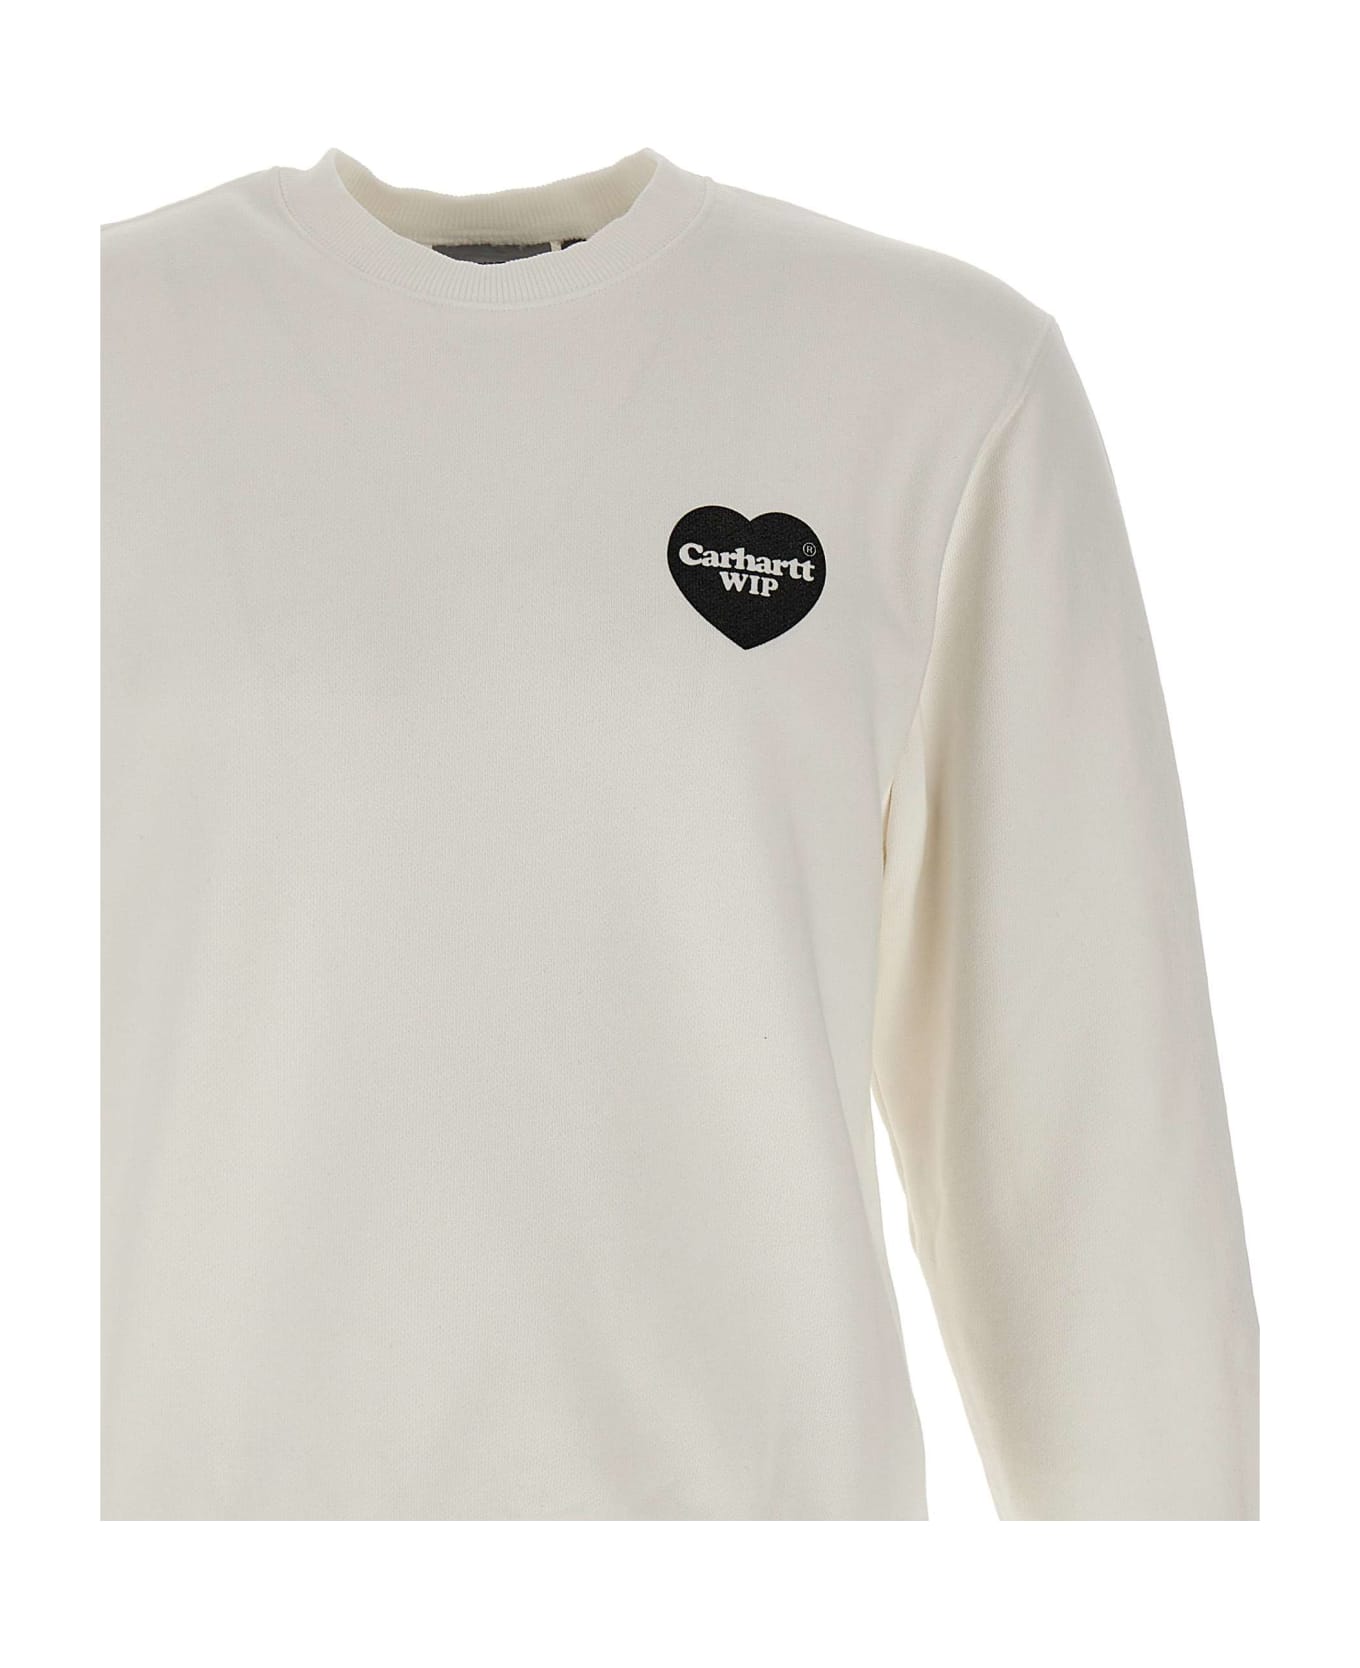 Carhartt 'heart Bandana' Cotton Sweatshirt - Bianco フリース